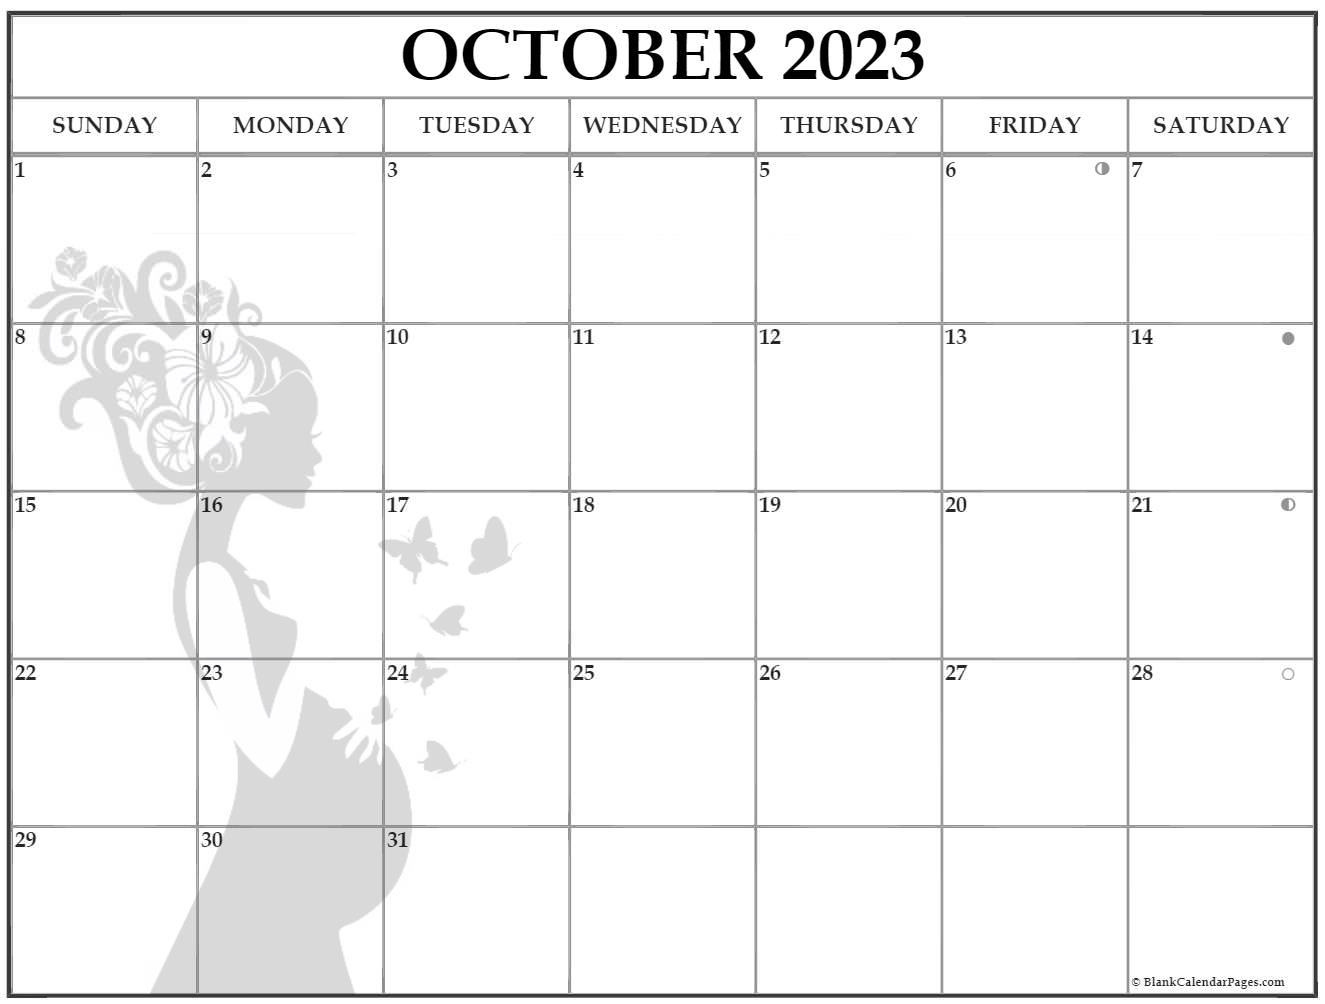 october-calender-october-calendar-printable-october-planner-2021